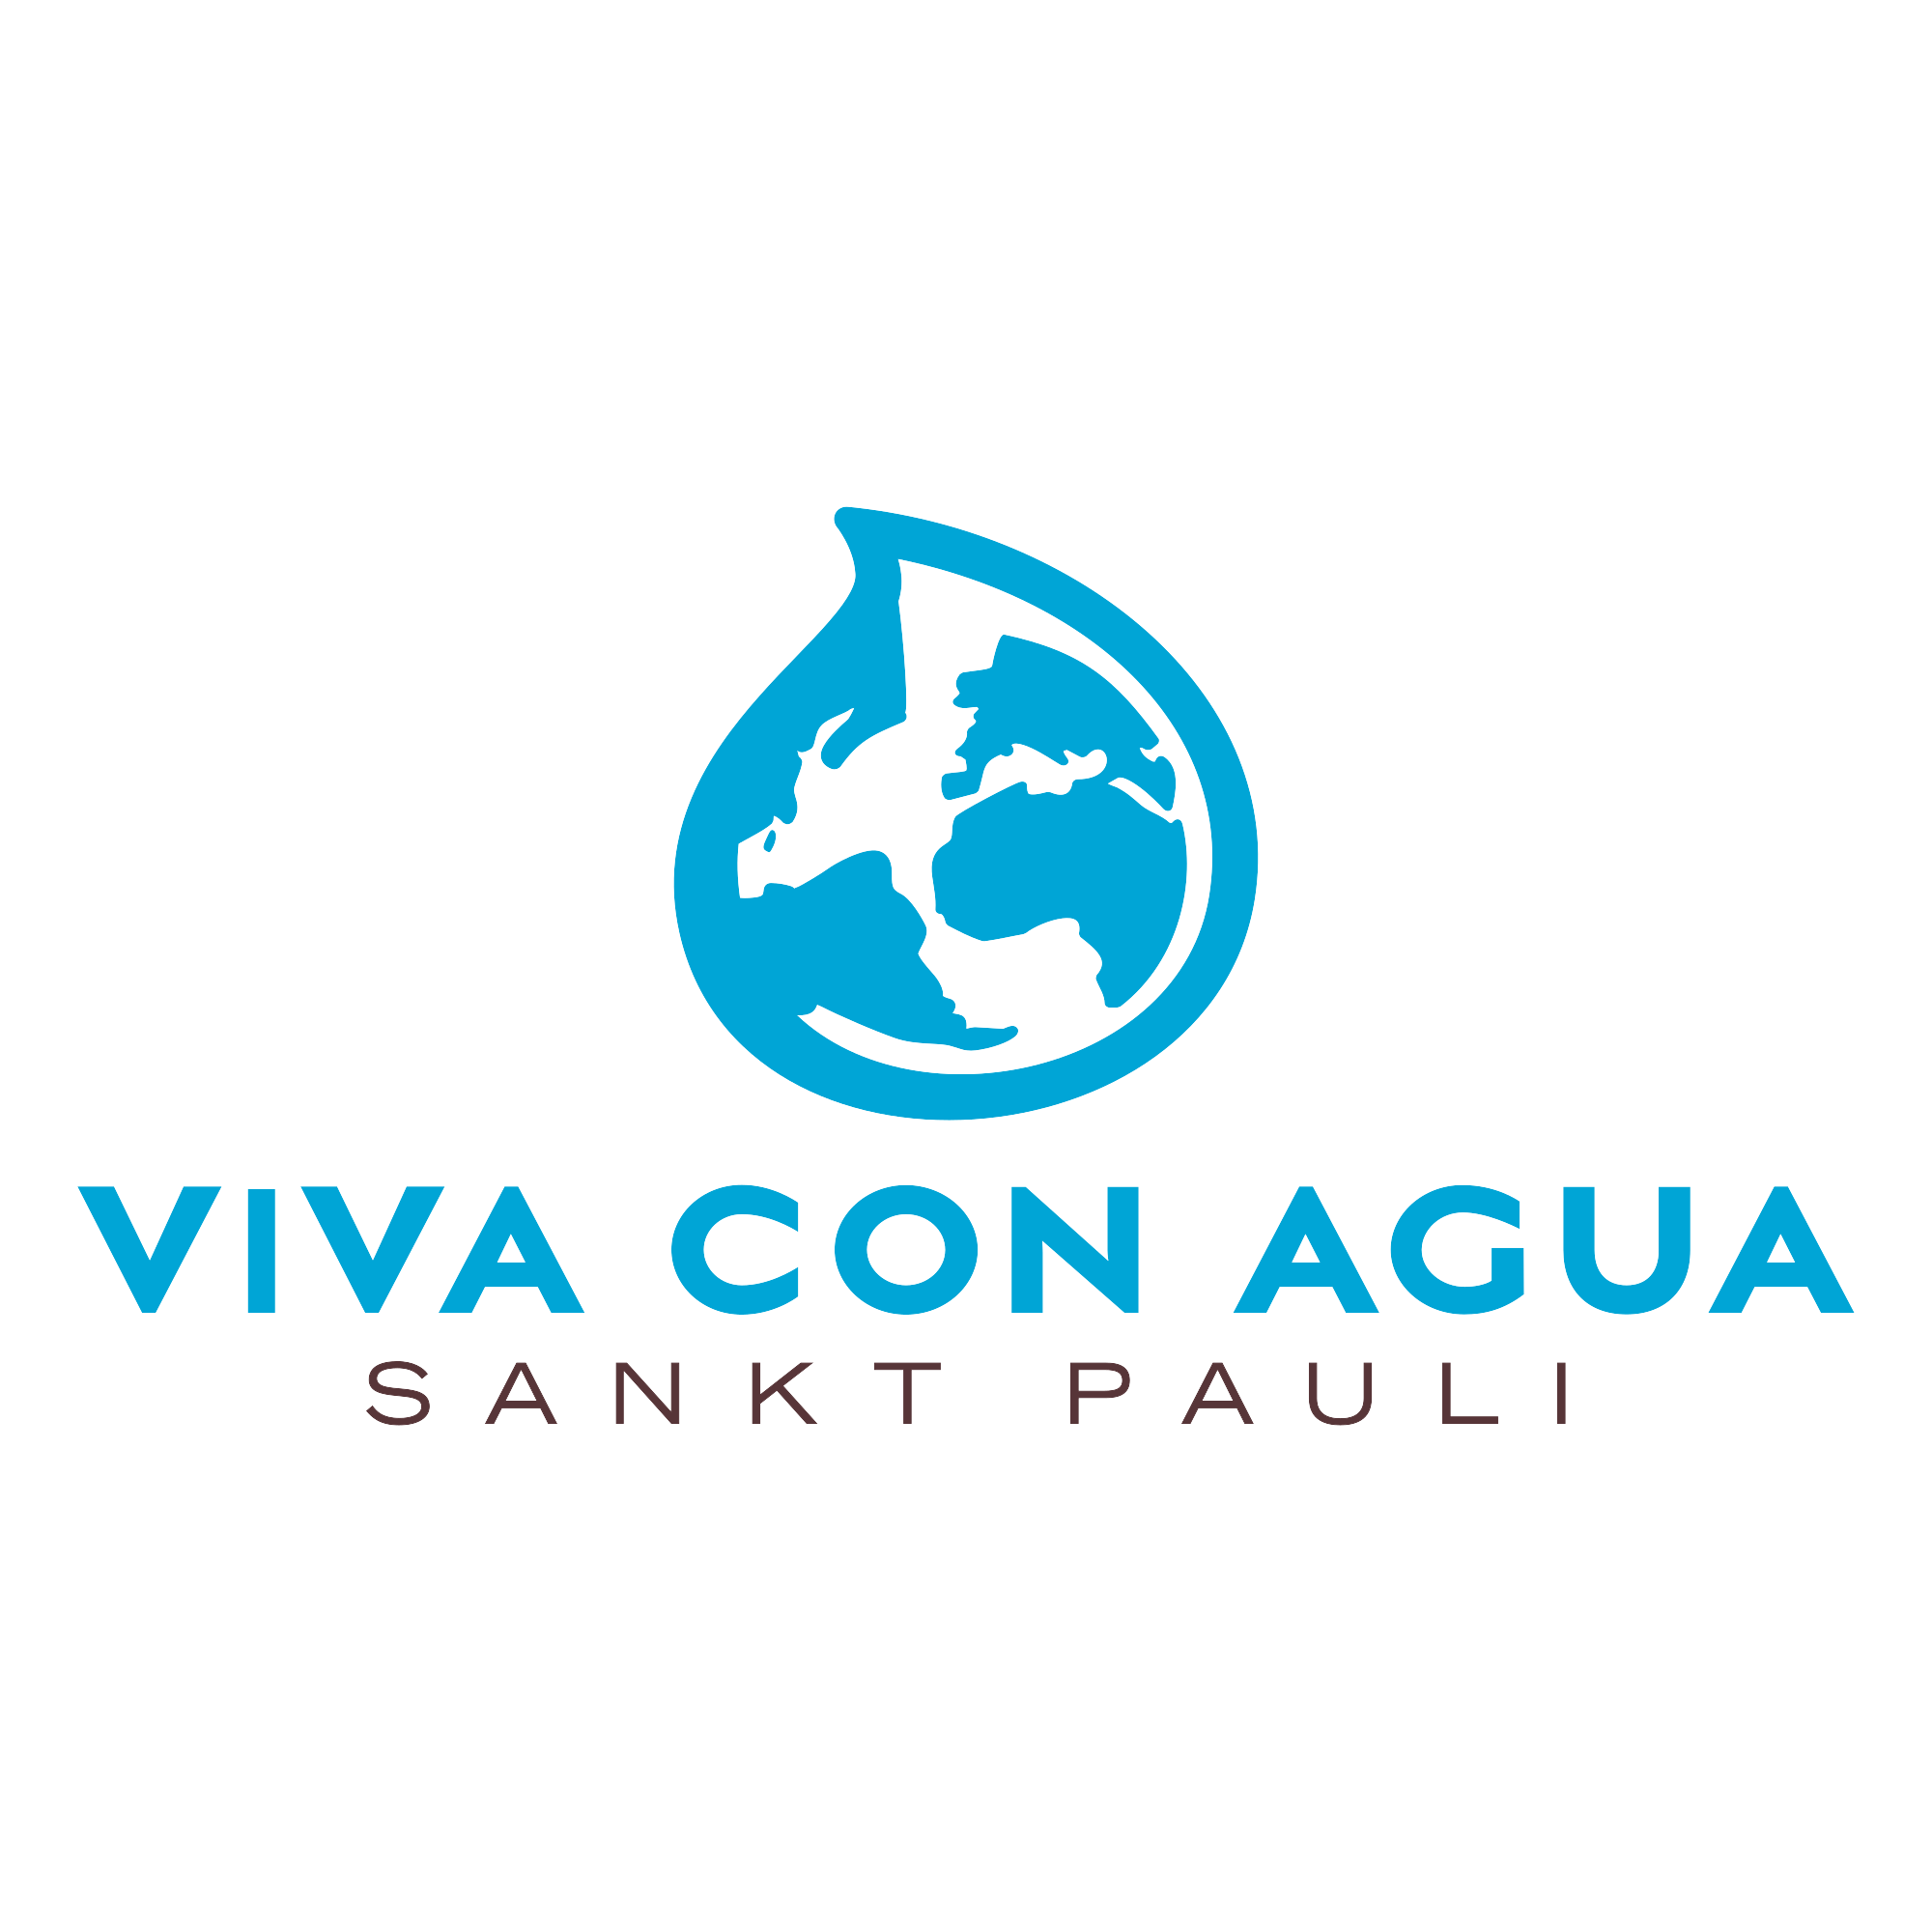 (c) Vivaconagua.foundation